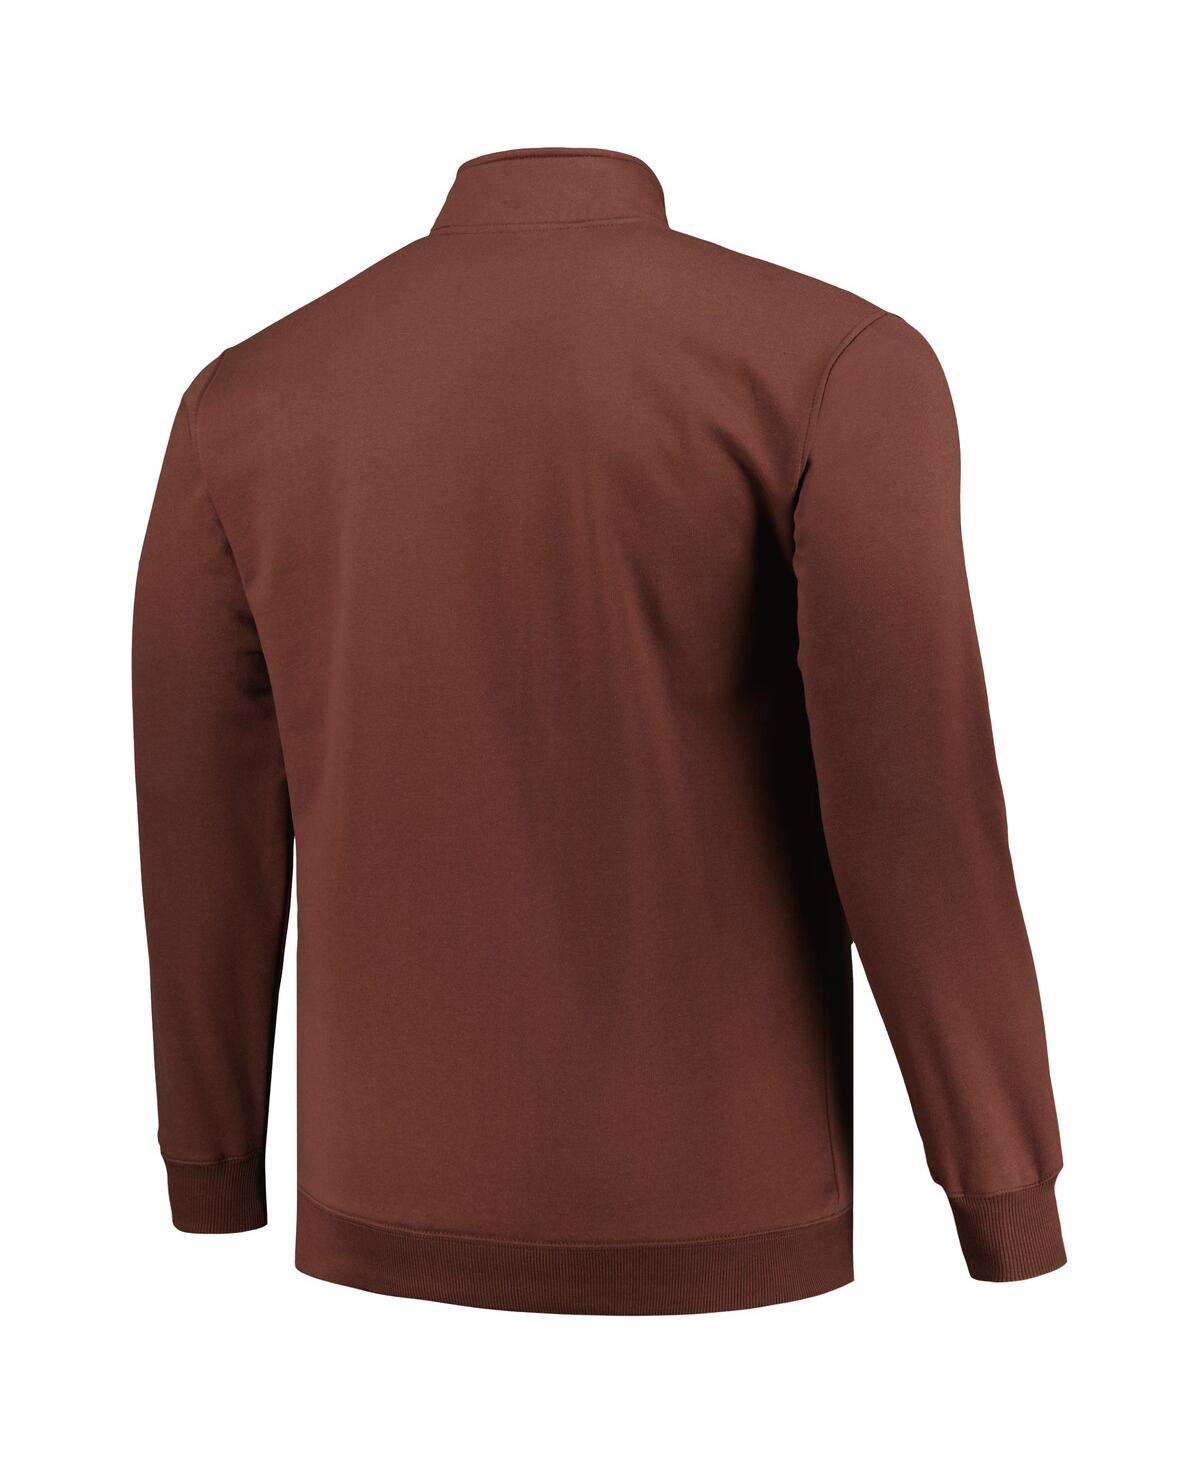 Shop Profile Men's  Brown Cleveland Browns Big And Tall Fleece Quarter-zip Jacket